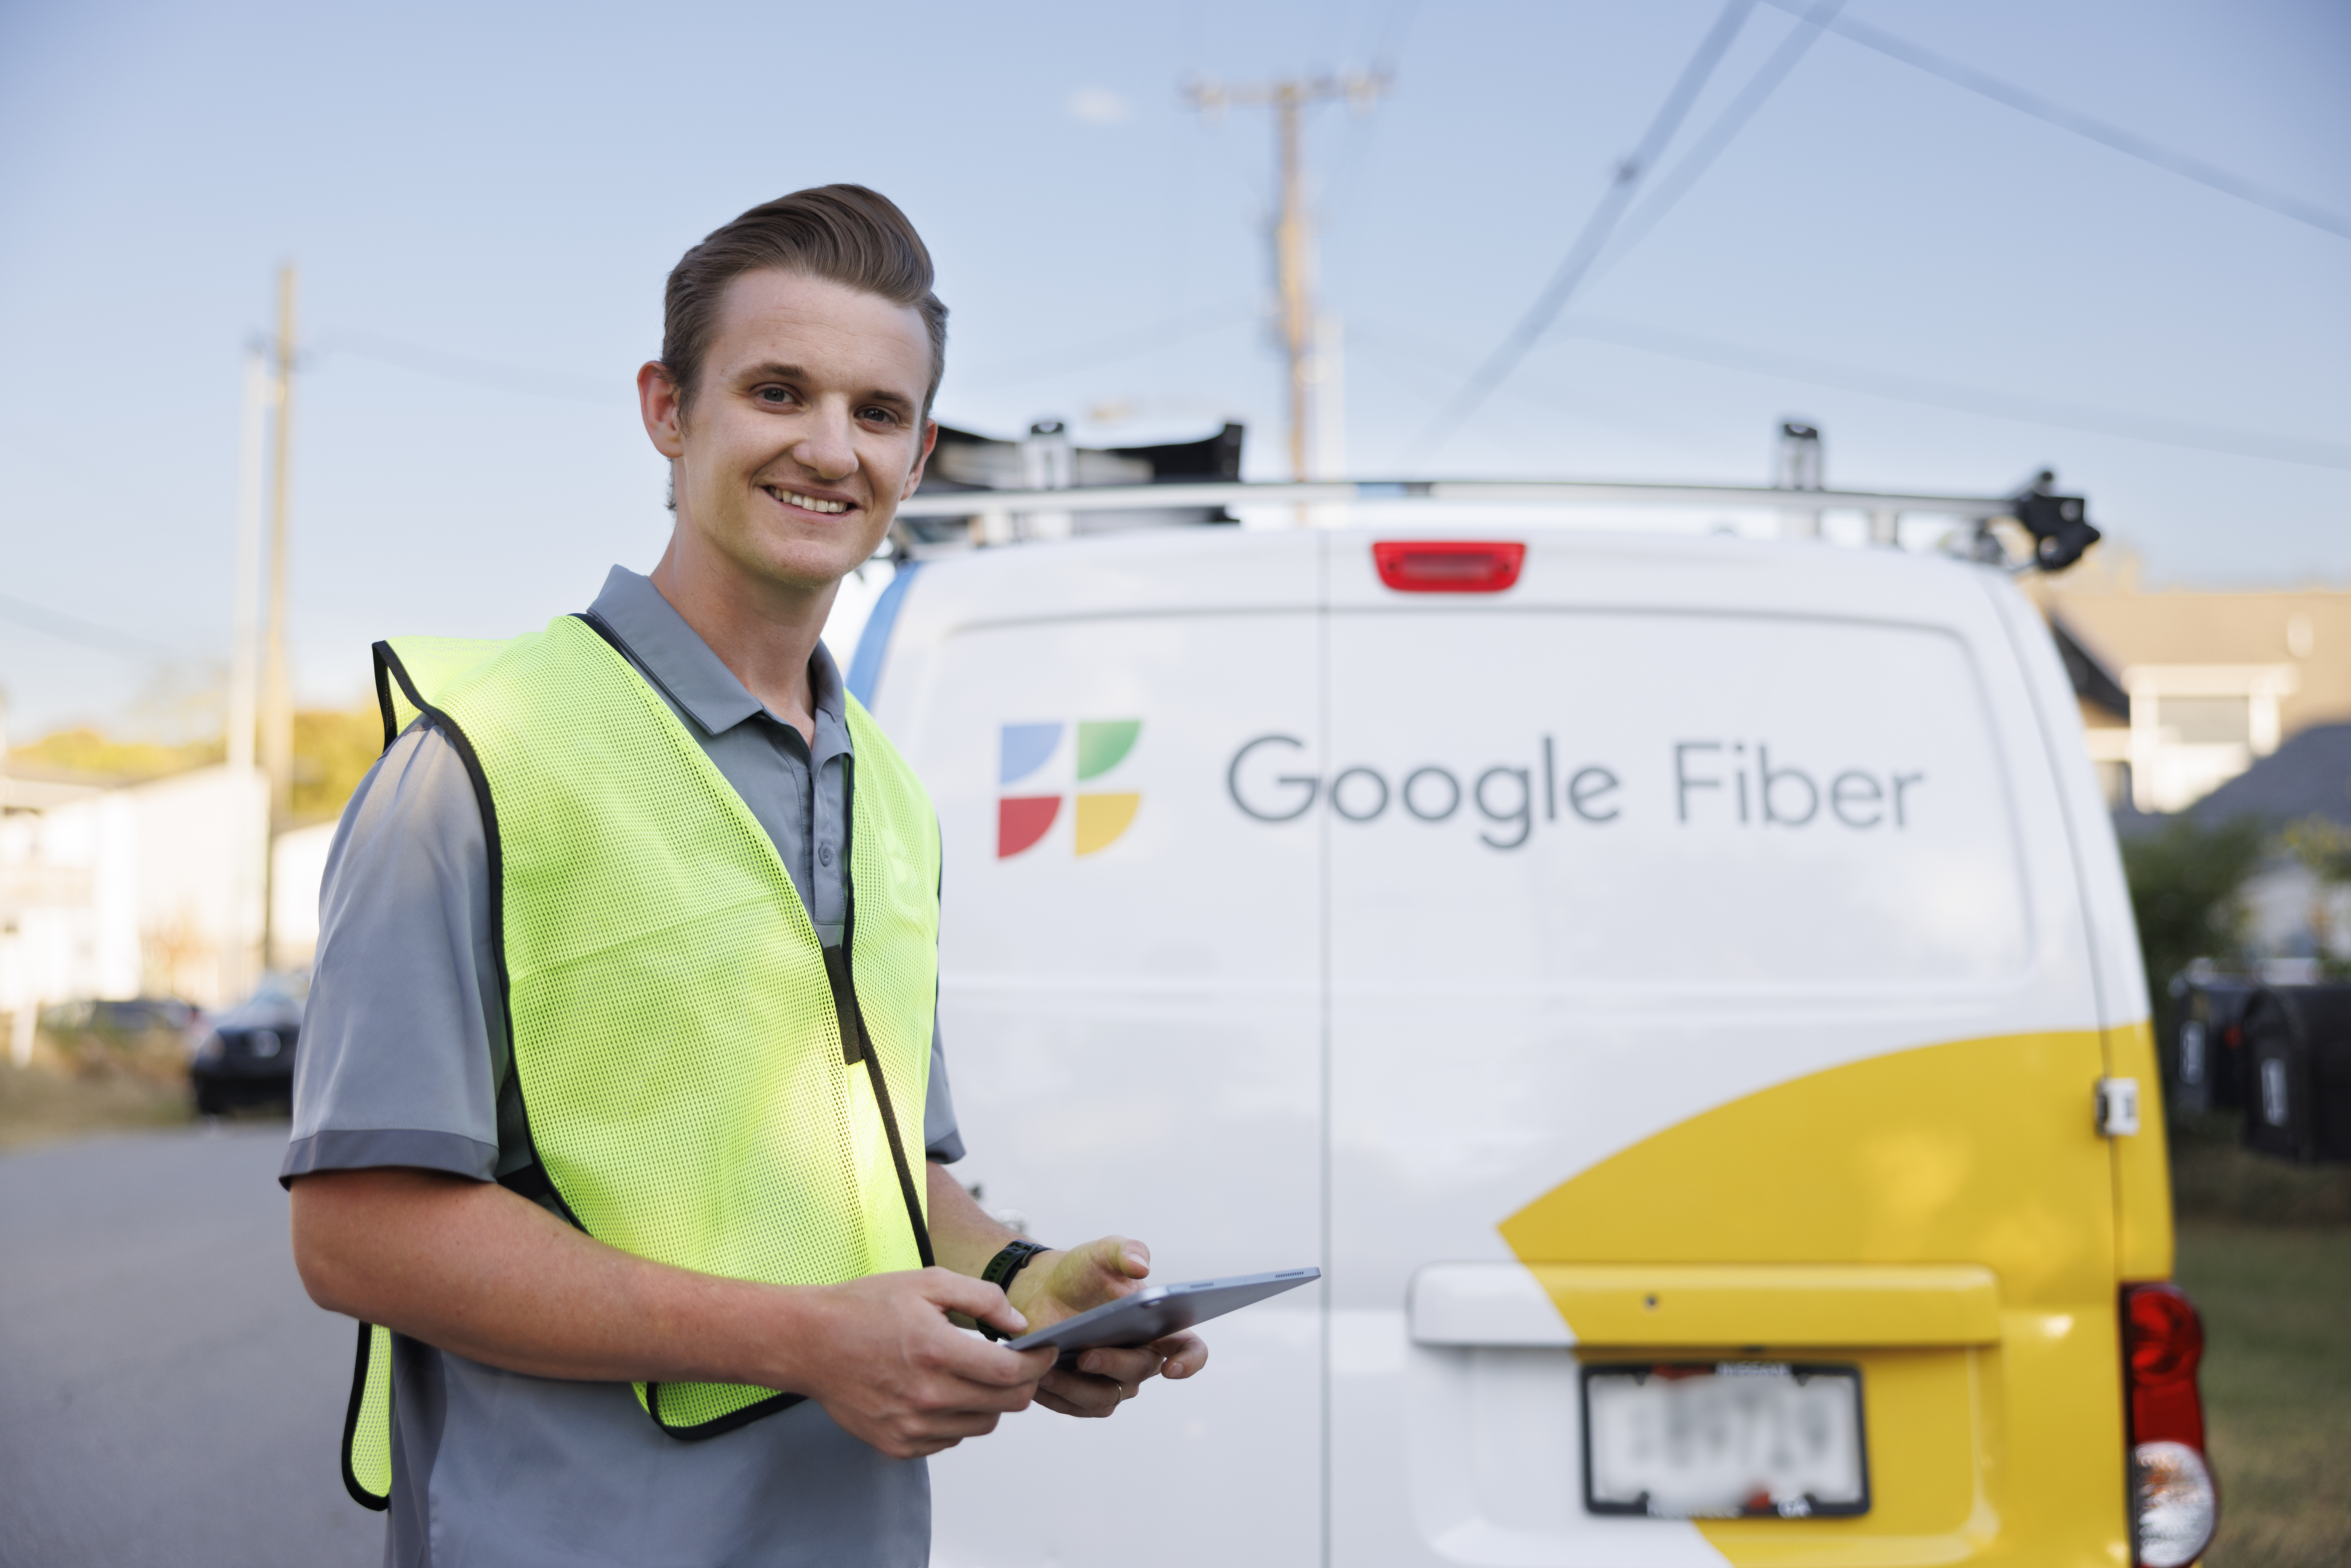 Google Fiber is coming to your neighborhood